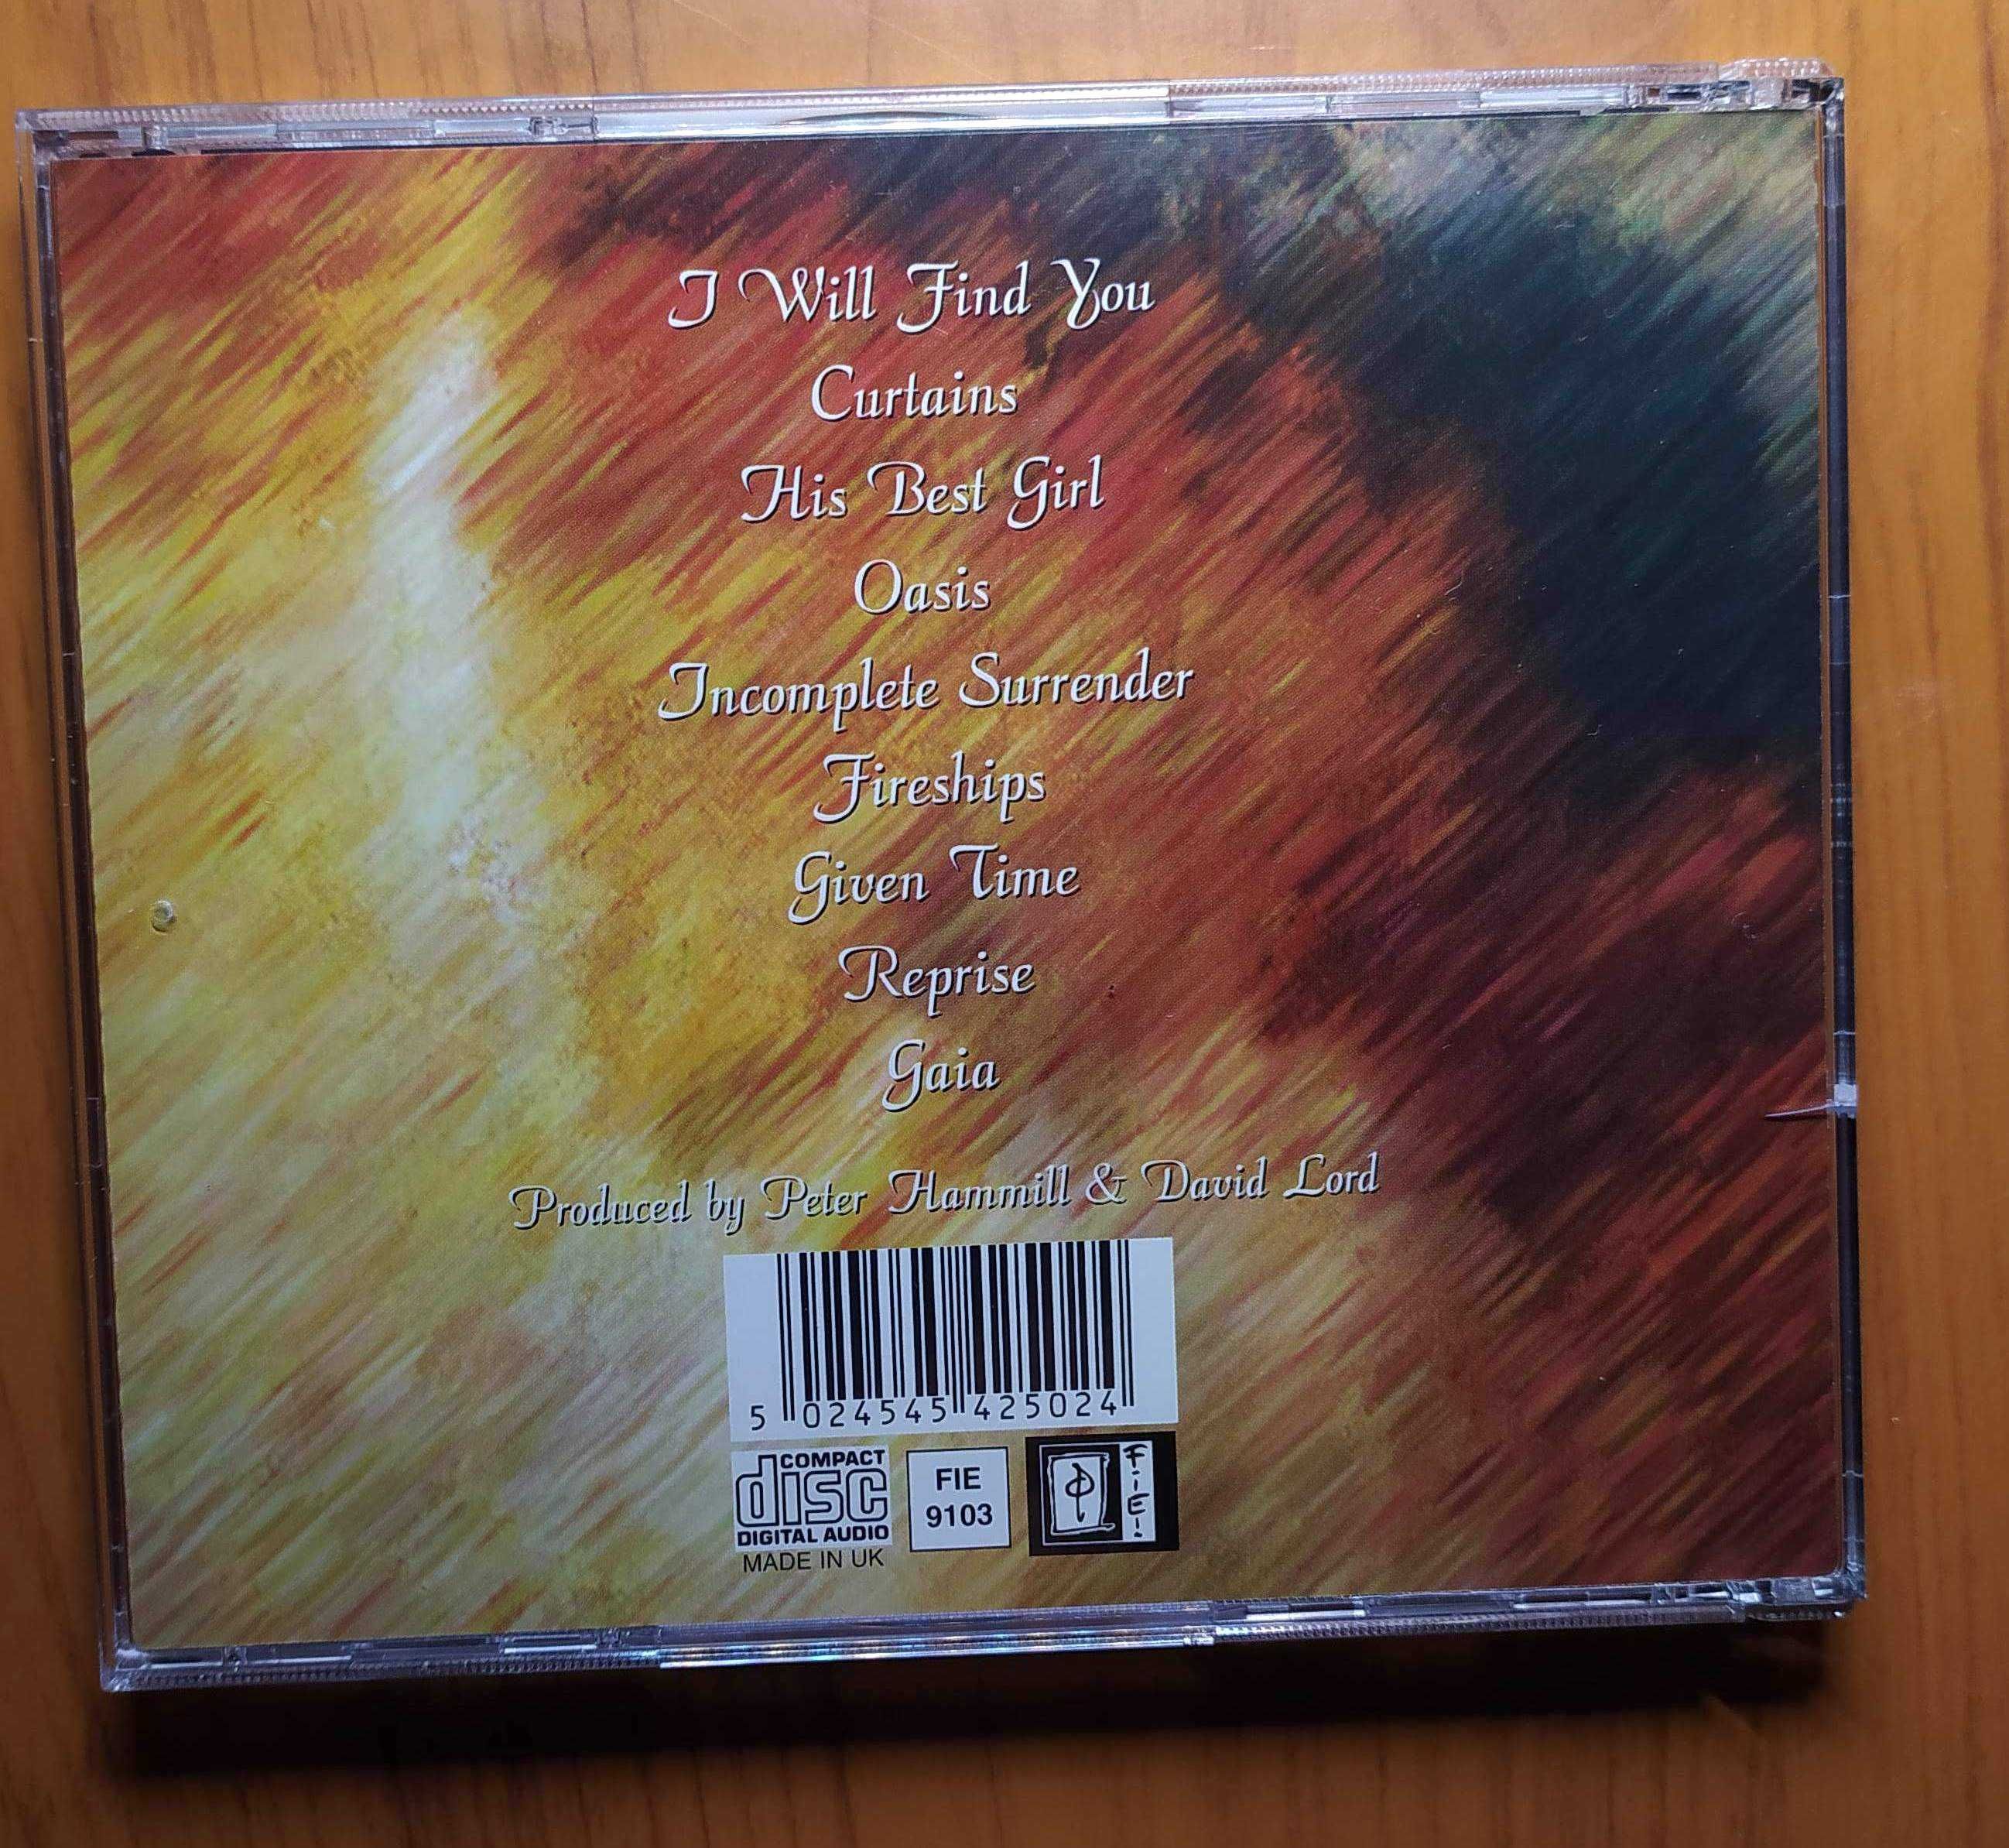 Фирменный CD Peter Hammill – "Fireships" 1992. Made in UK/